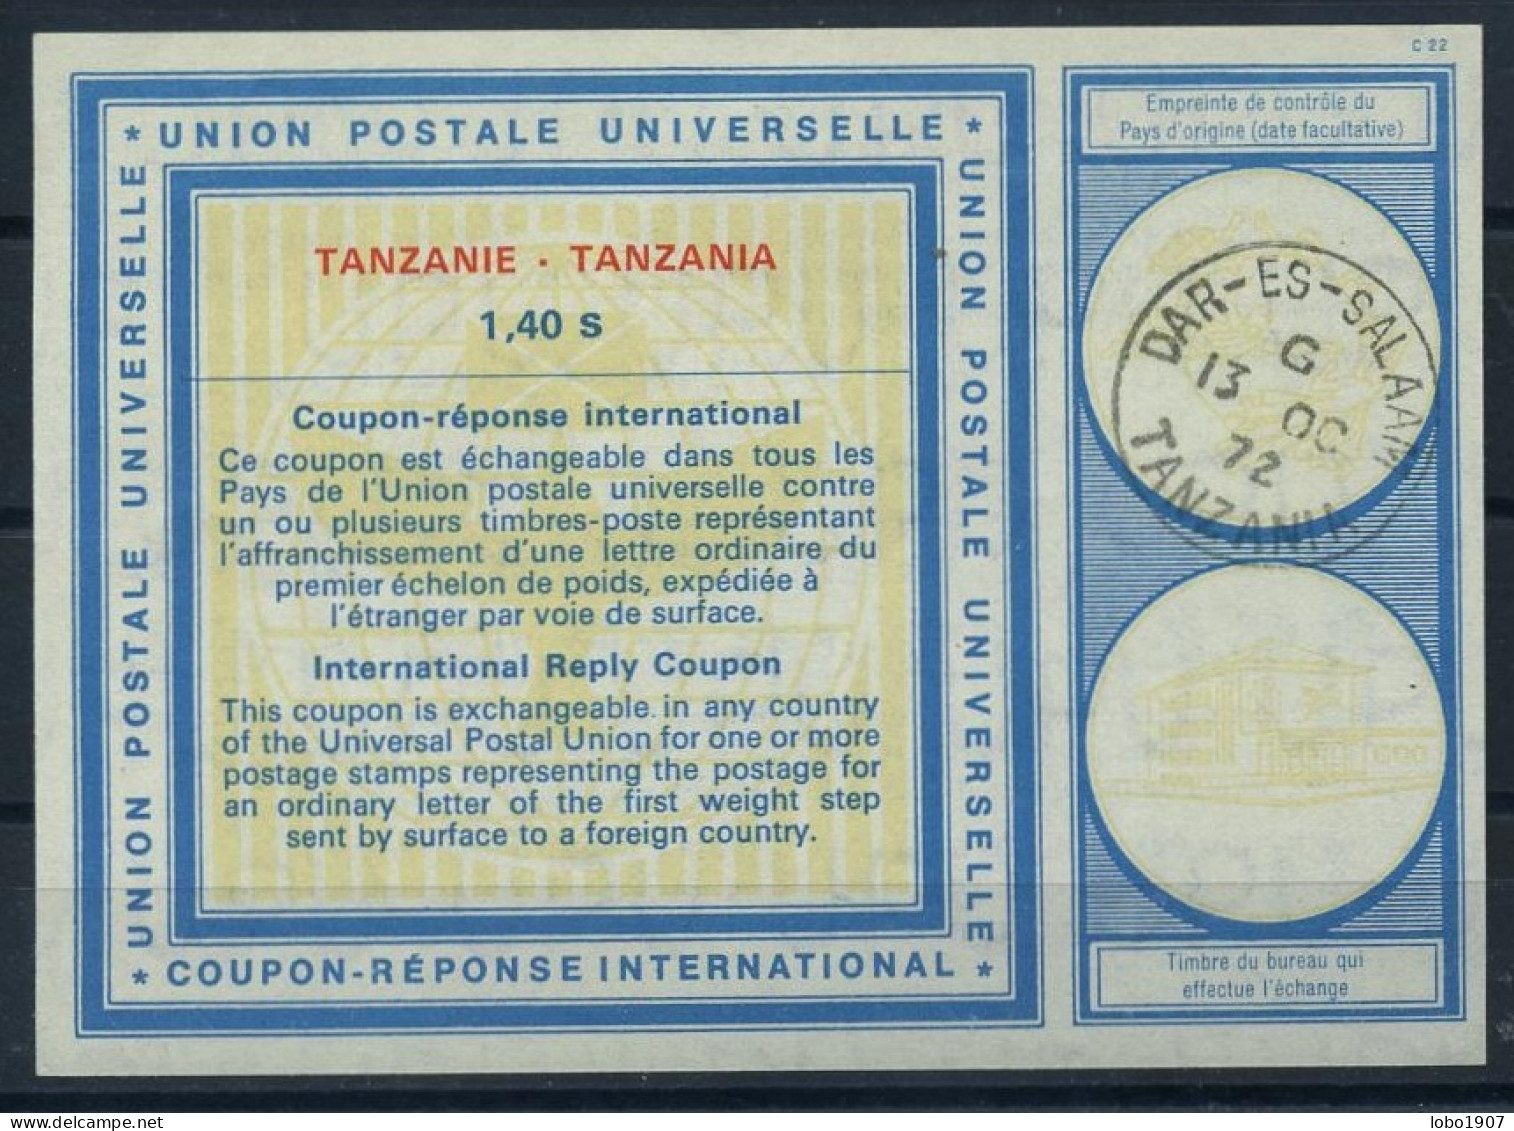 TANZANIE TANZANIA  Vi20  1,40 S  International Reply Coupon Reponse Antwortschein IRC IAS  DAR-ES-SALAAM 13.10.72 - Tanzanie (1964-...)